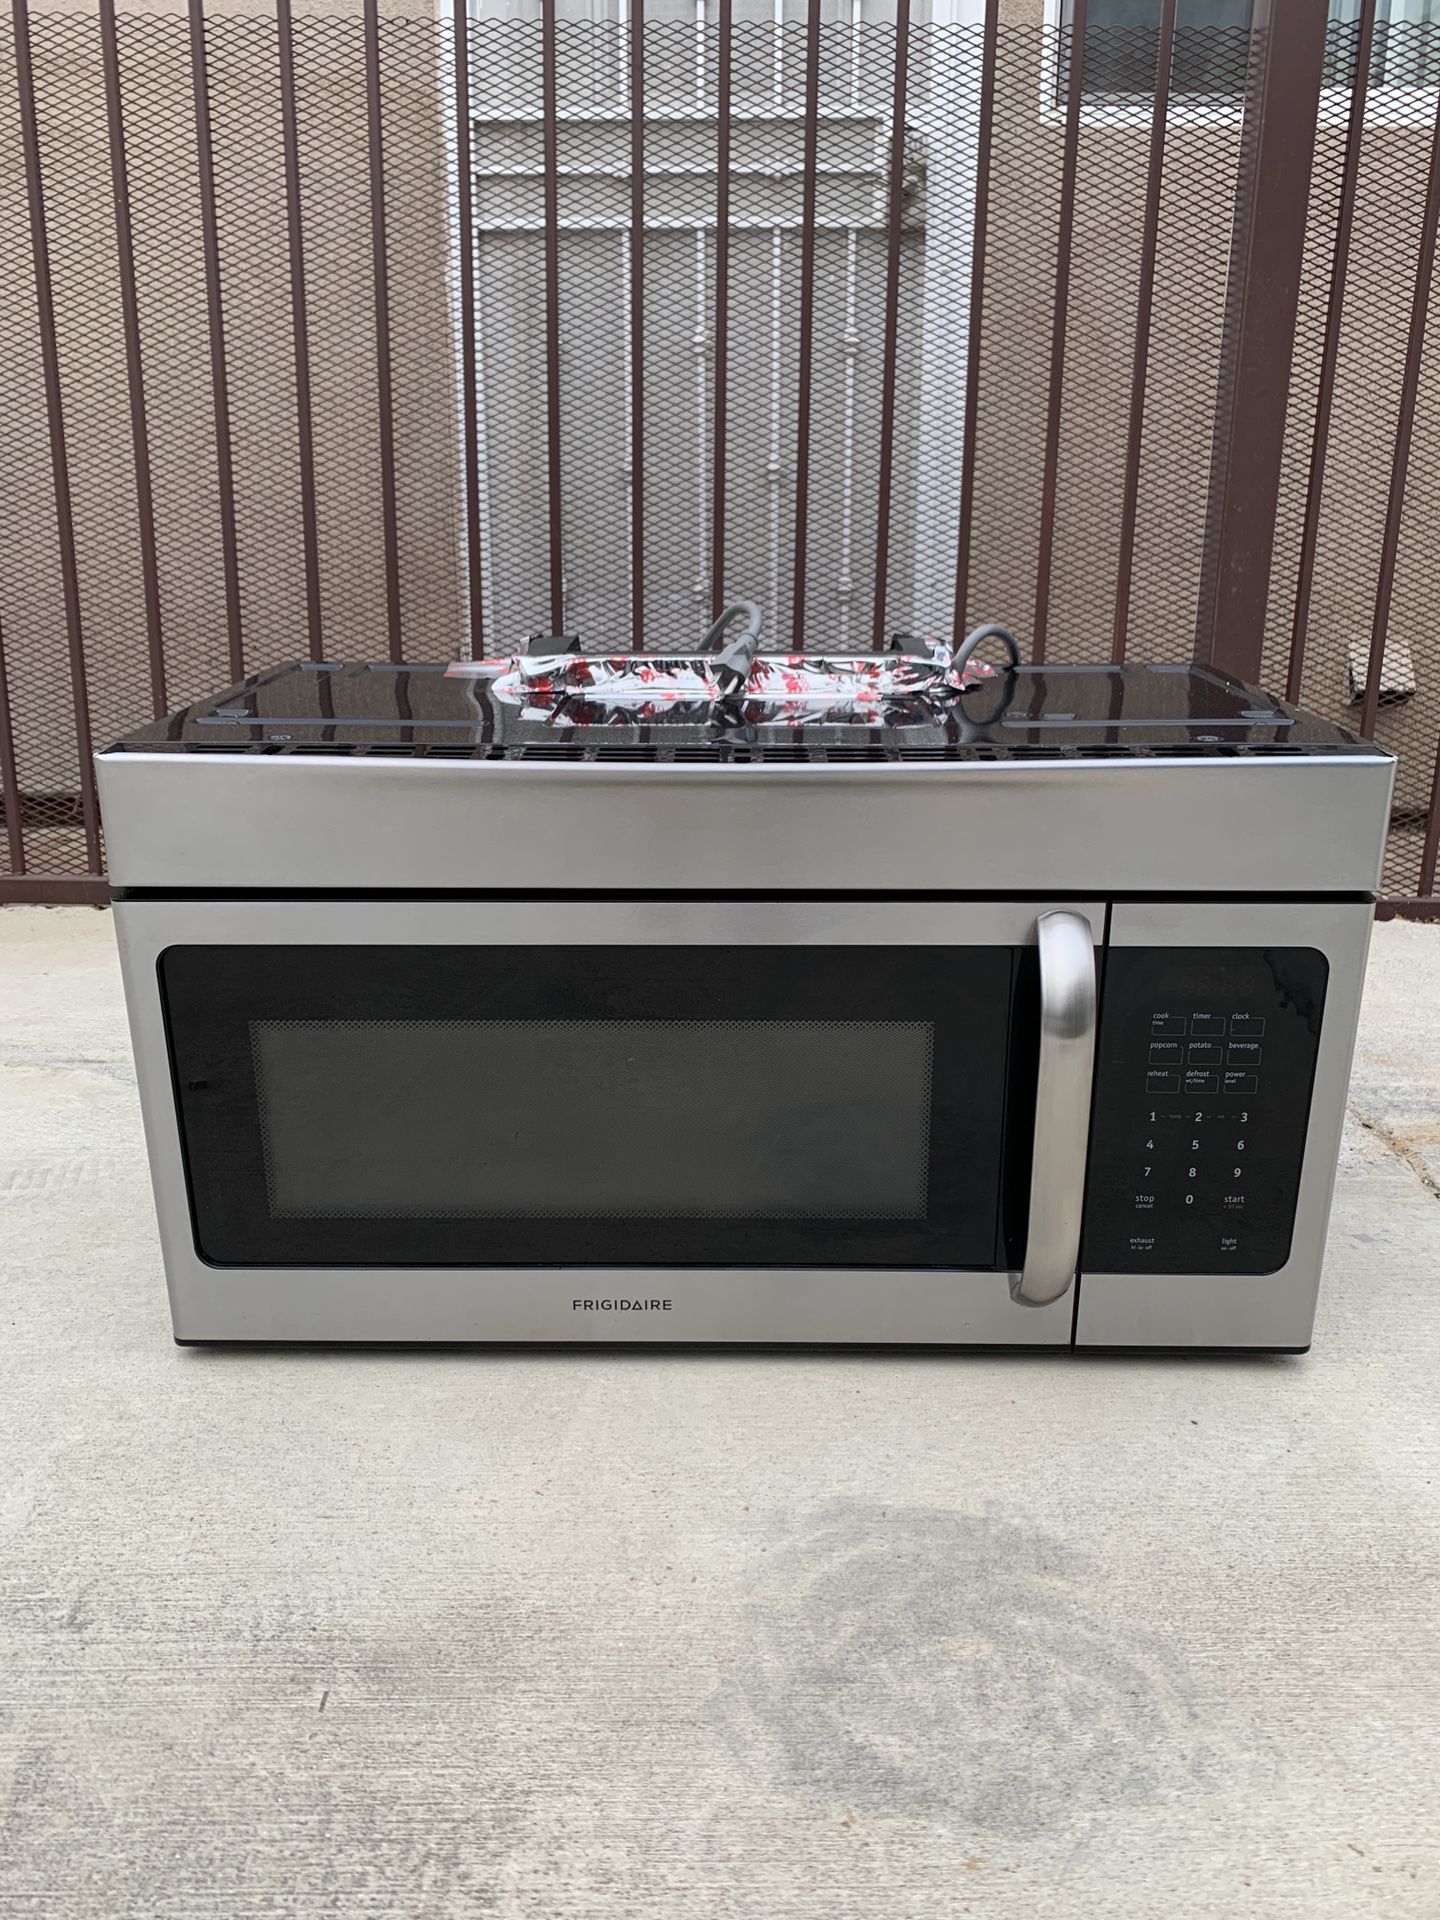 Frigidaire stove top microwave